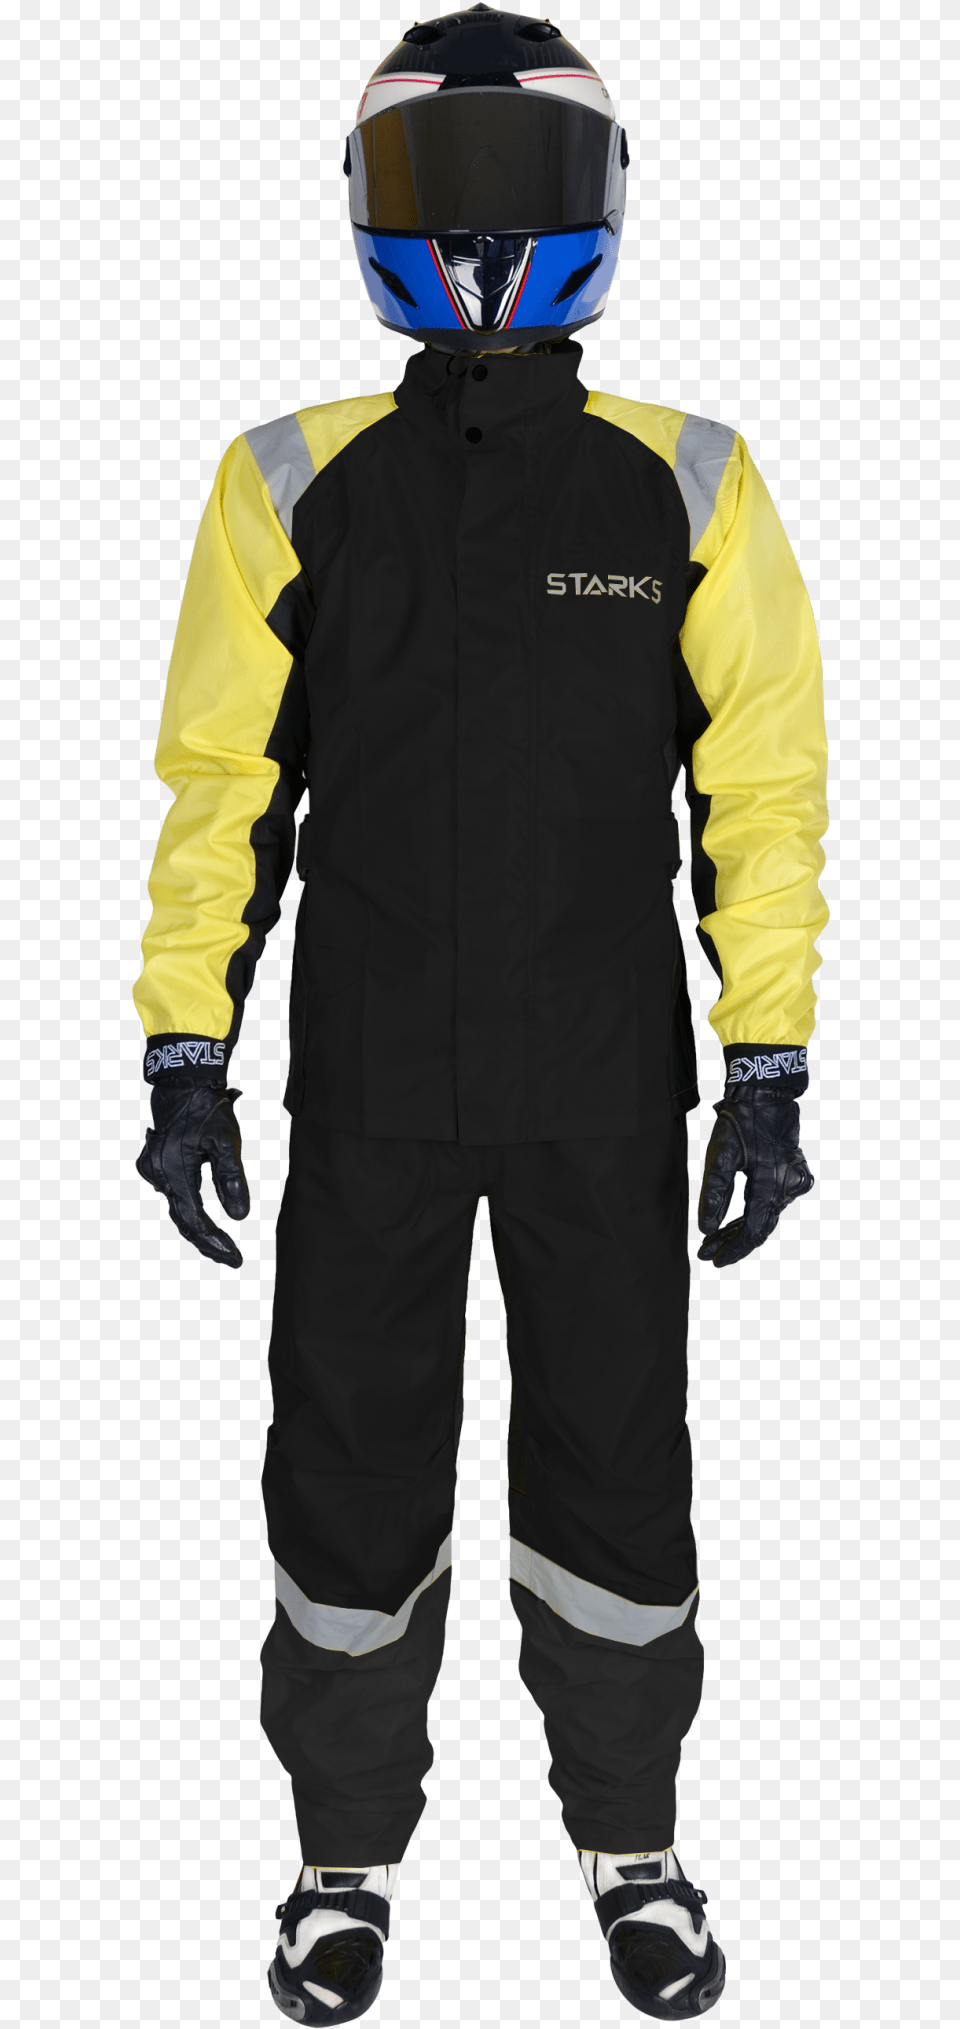 Starks Light Rain Dry Suit, Jacket, Clothing, Coat, Glove Png